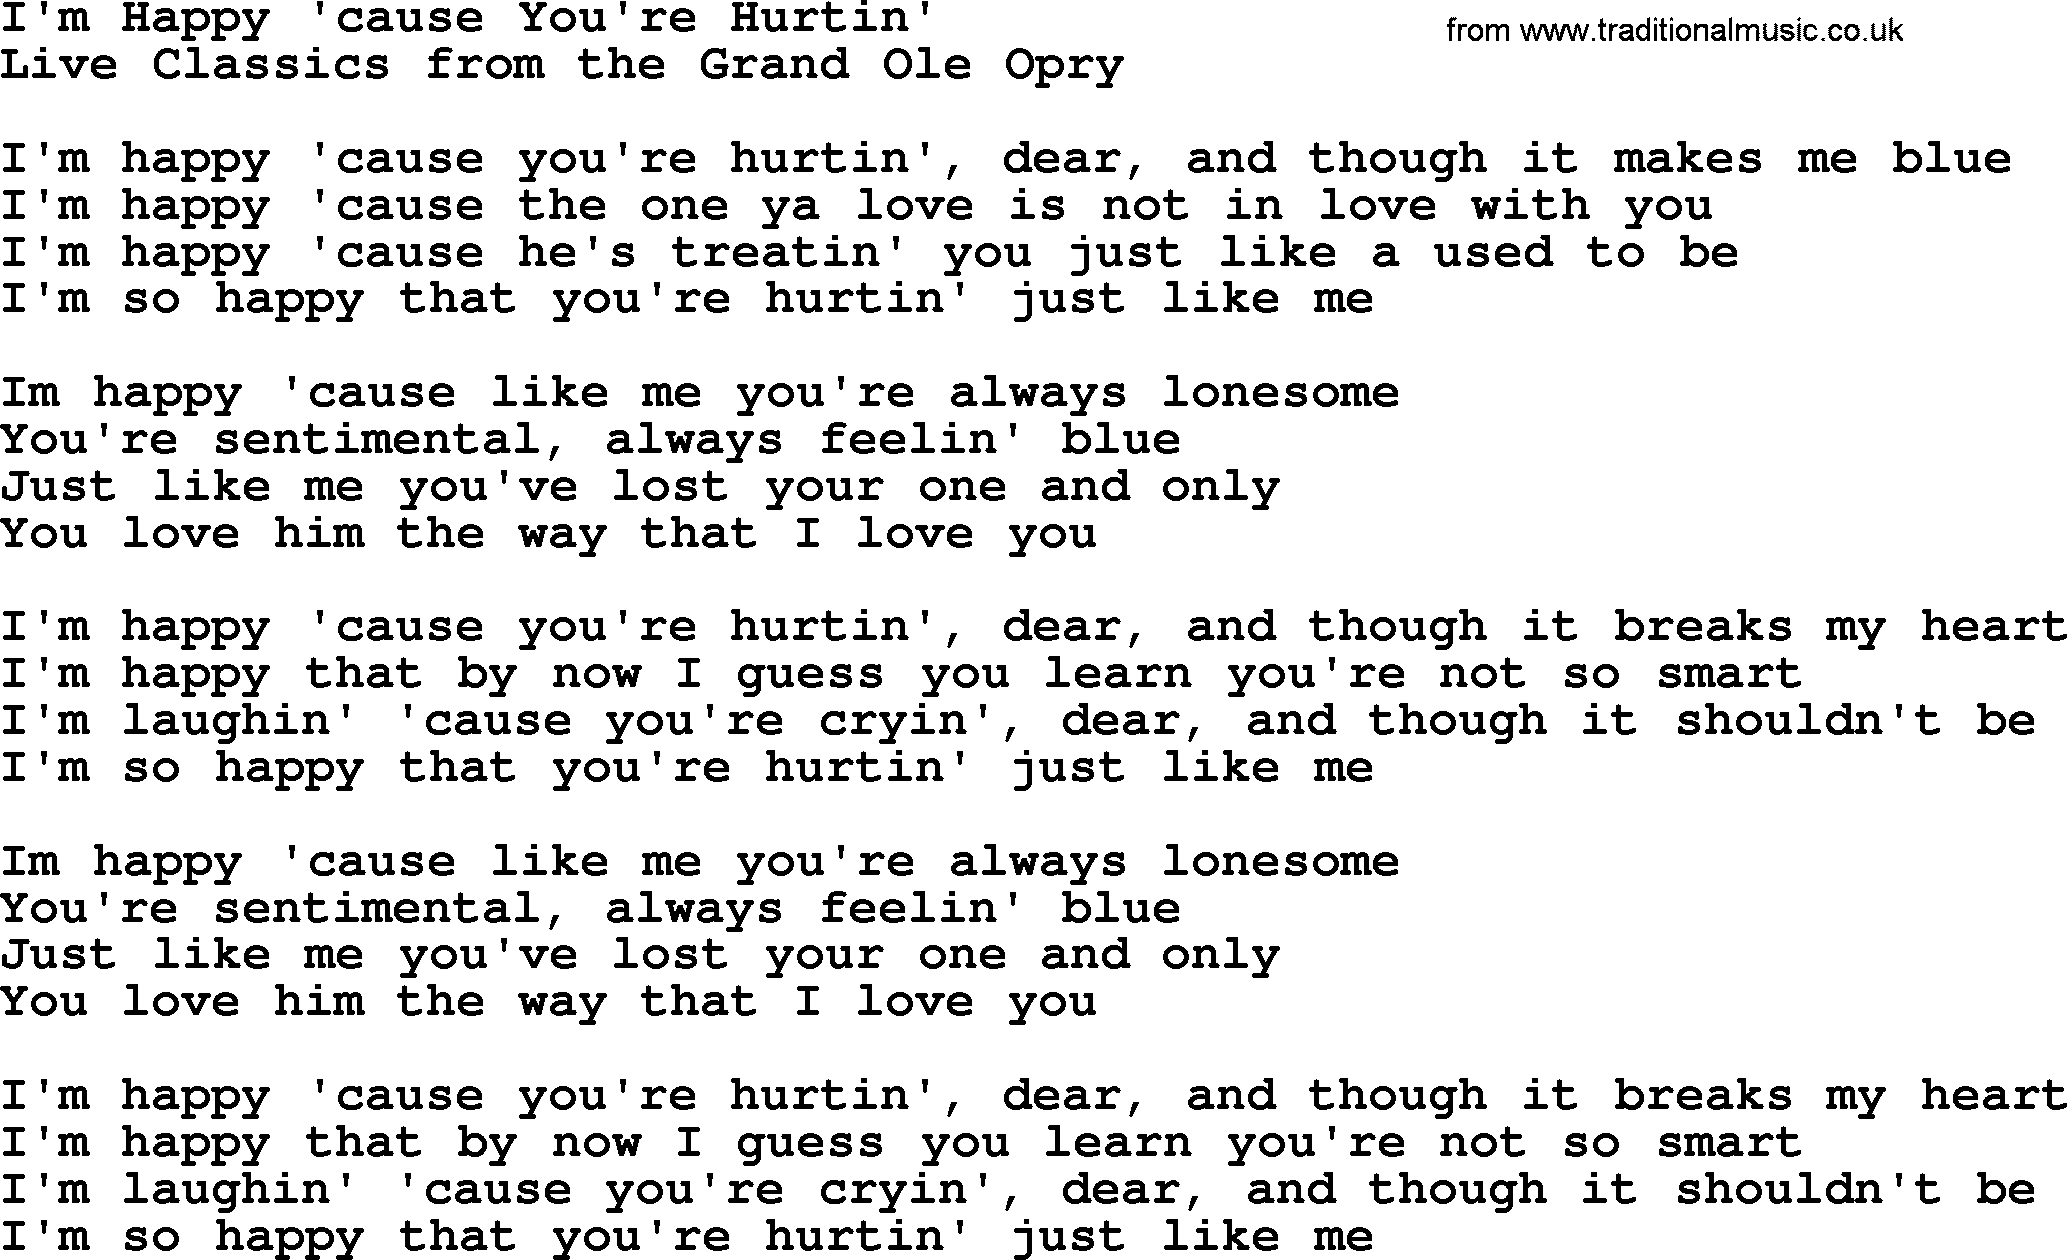 Marty Robbins song: I'm Happy Cause You're Hurtin, lyrics